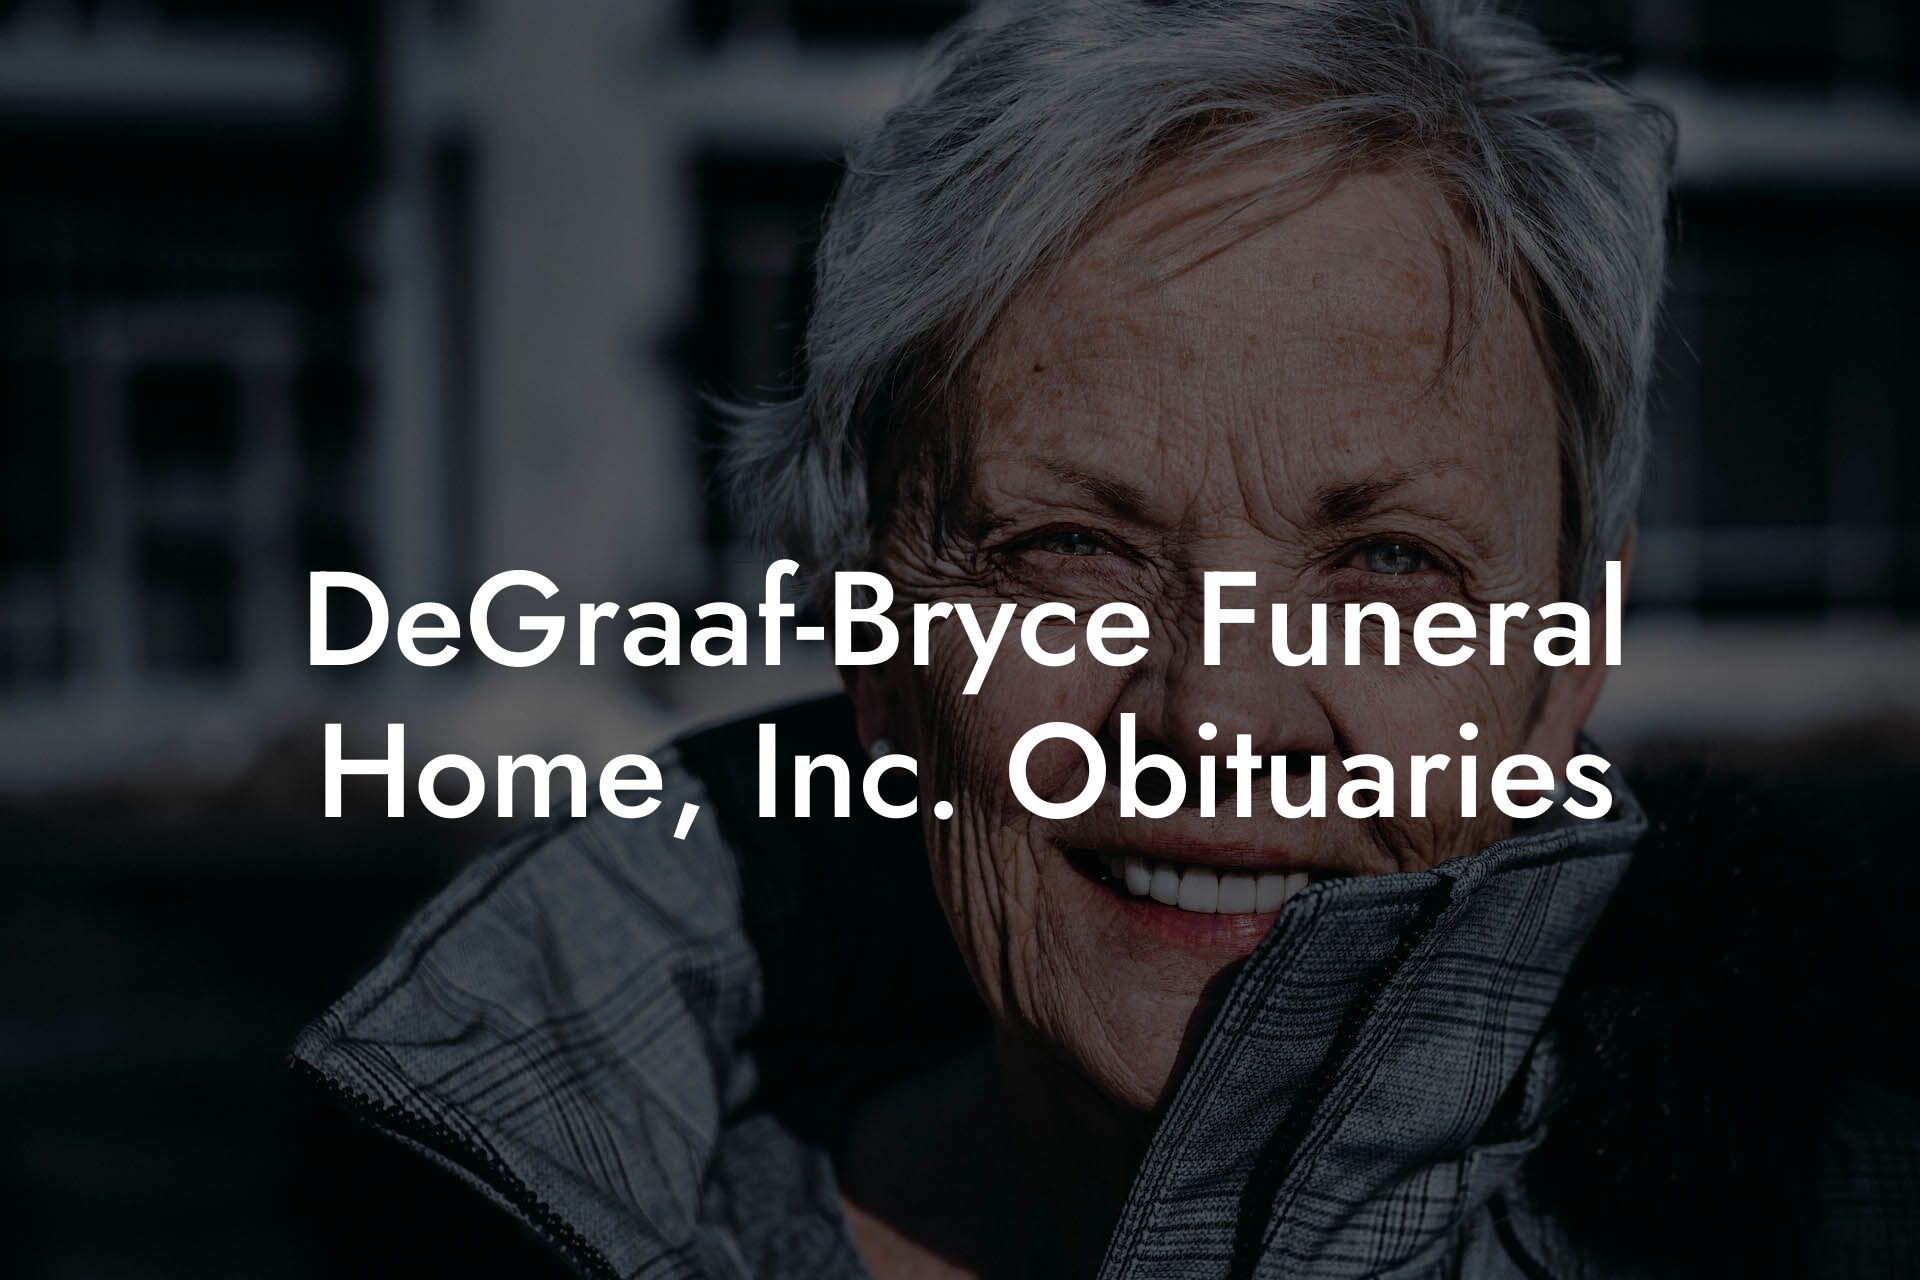 DeGraaf-Bryce Funeral Home, Inc. Obituaries